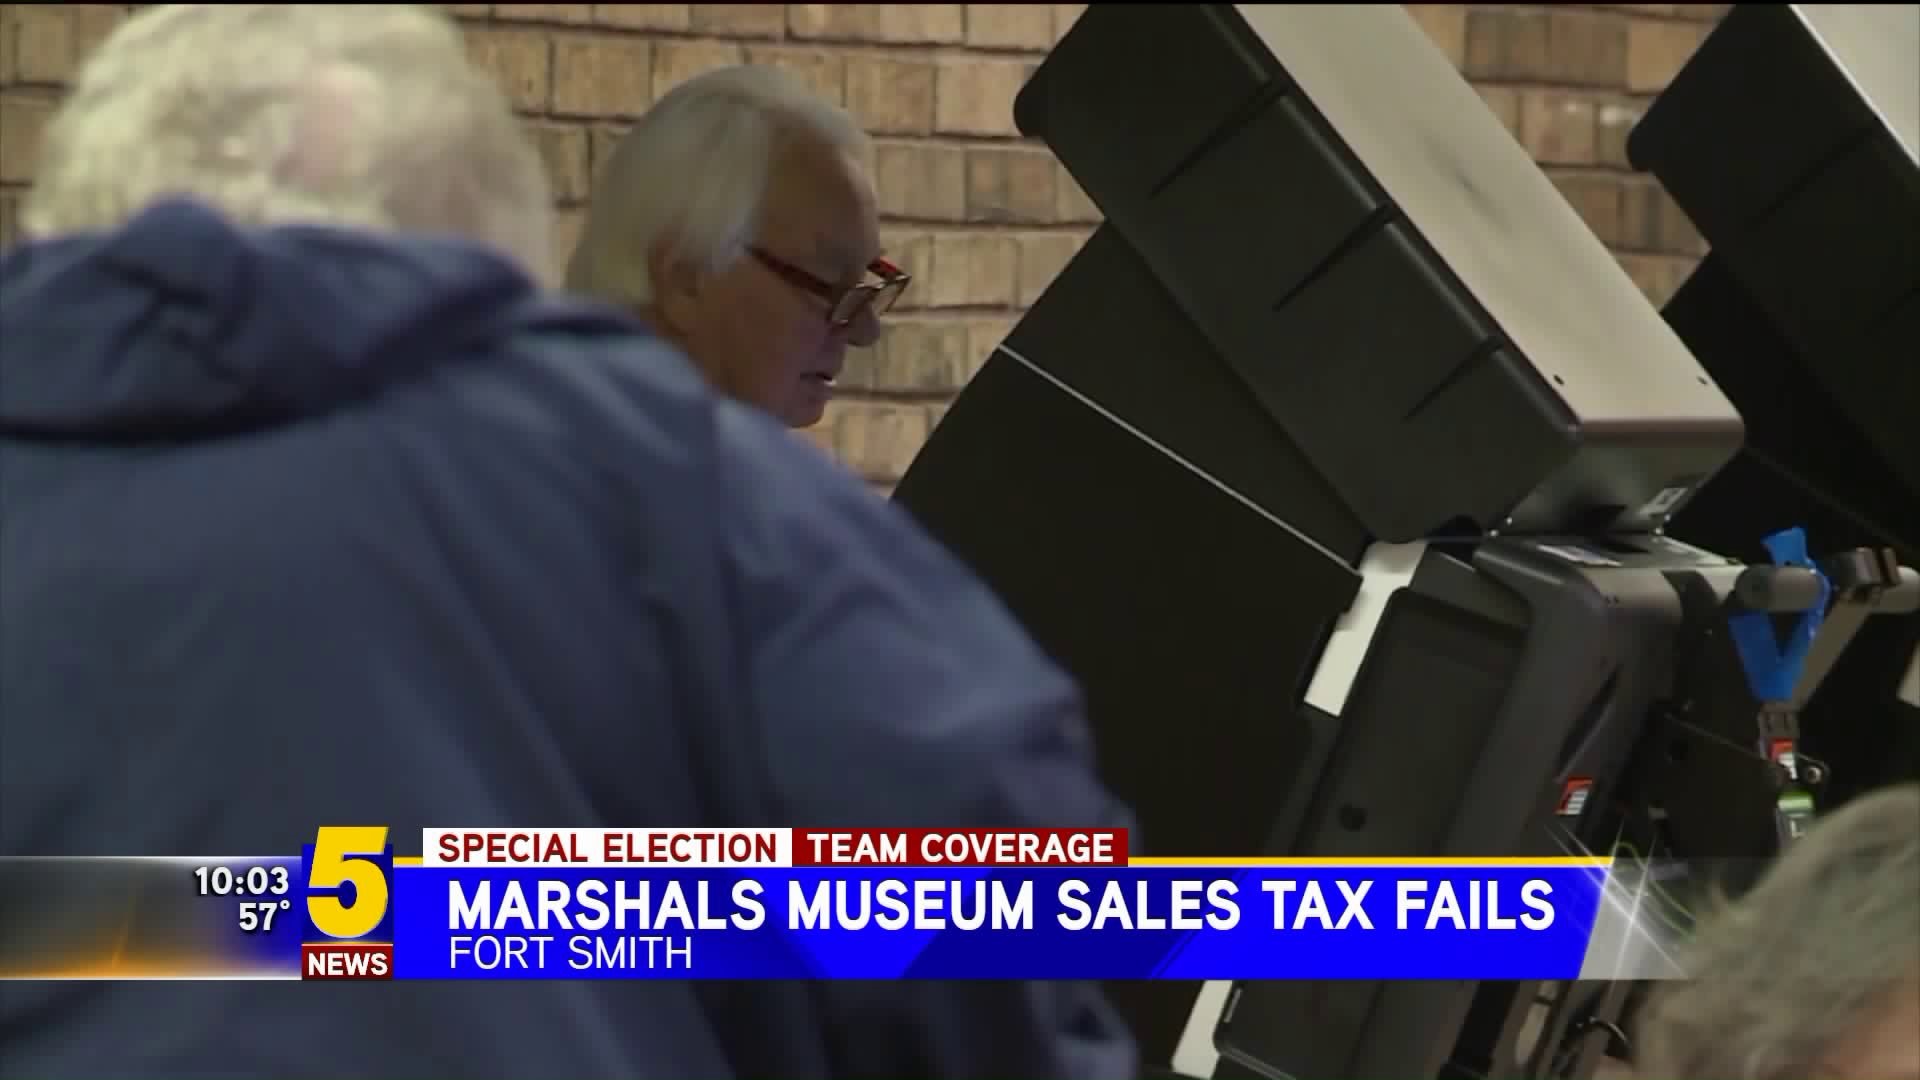 Marshals Museum Sales Tax Fails